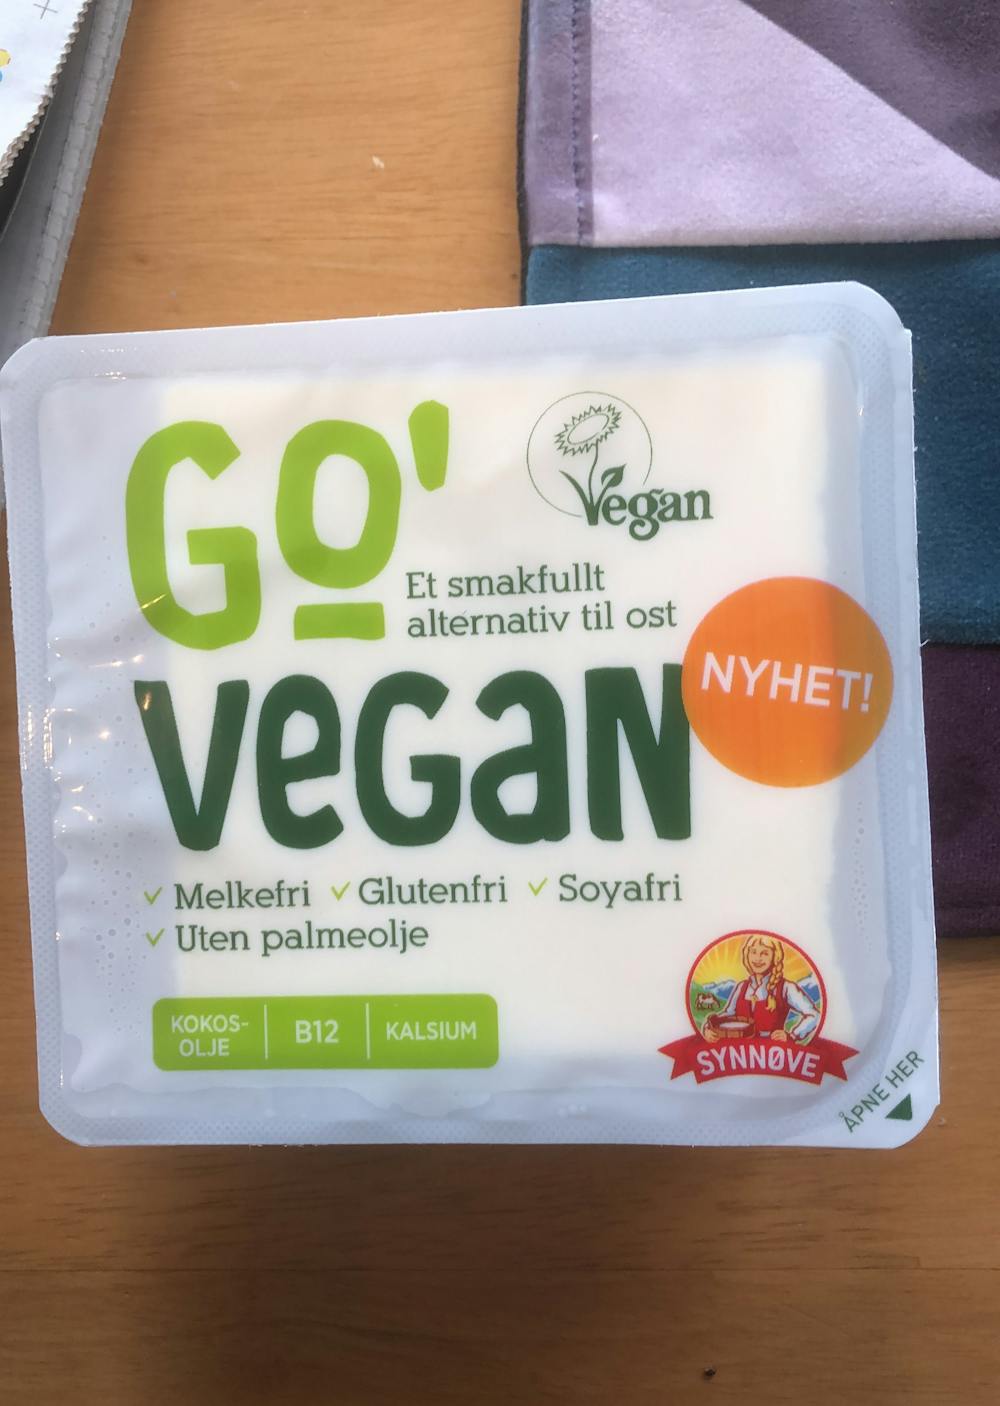 Go' vegan et smakfullt alternativ til ost, Synnøve